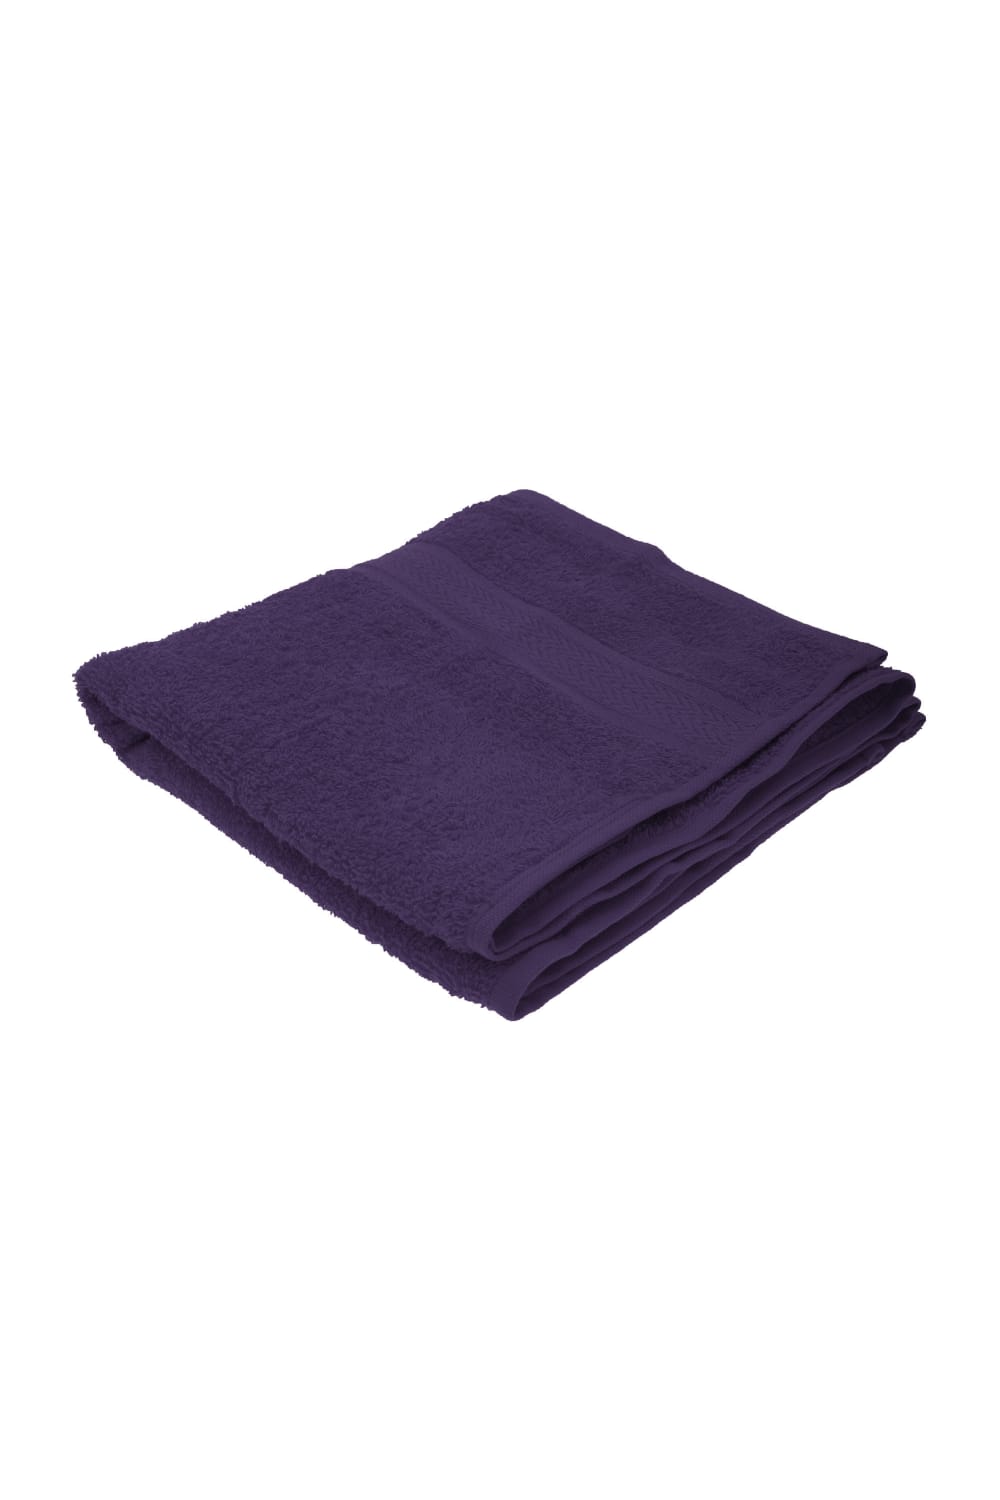 Jassz Plain Towel (Pack of 2) (Aubergine) (One Size)